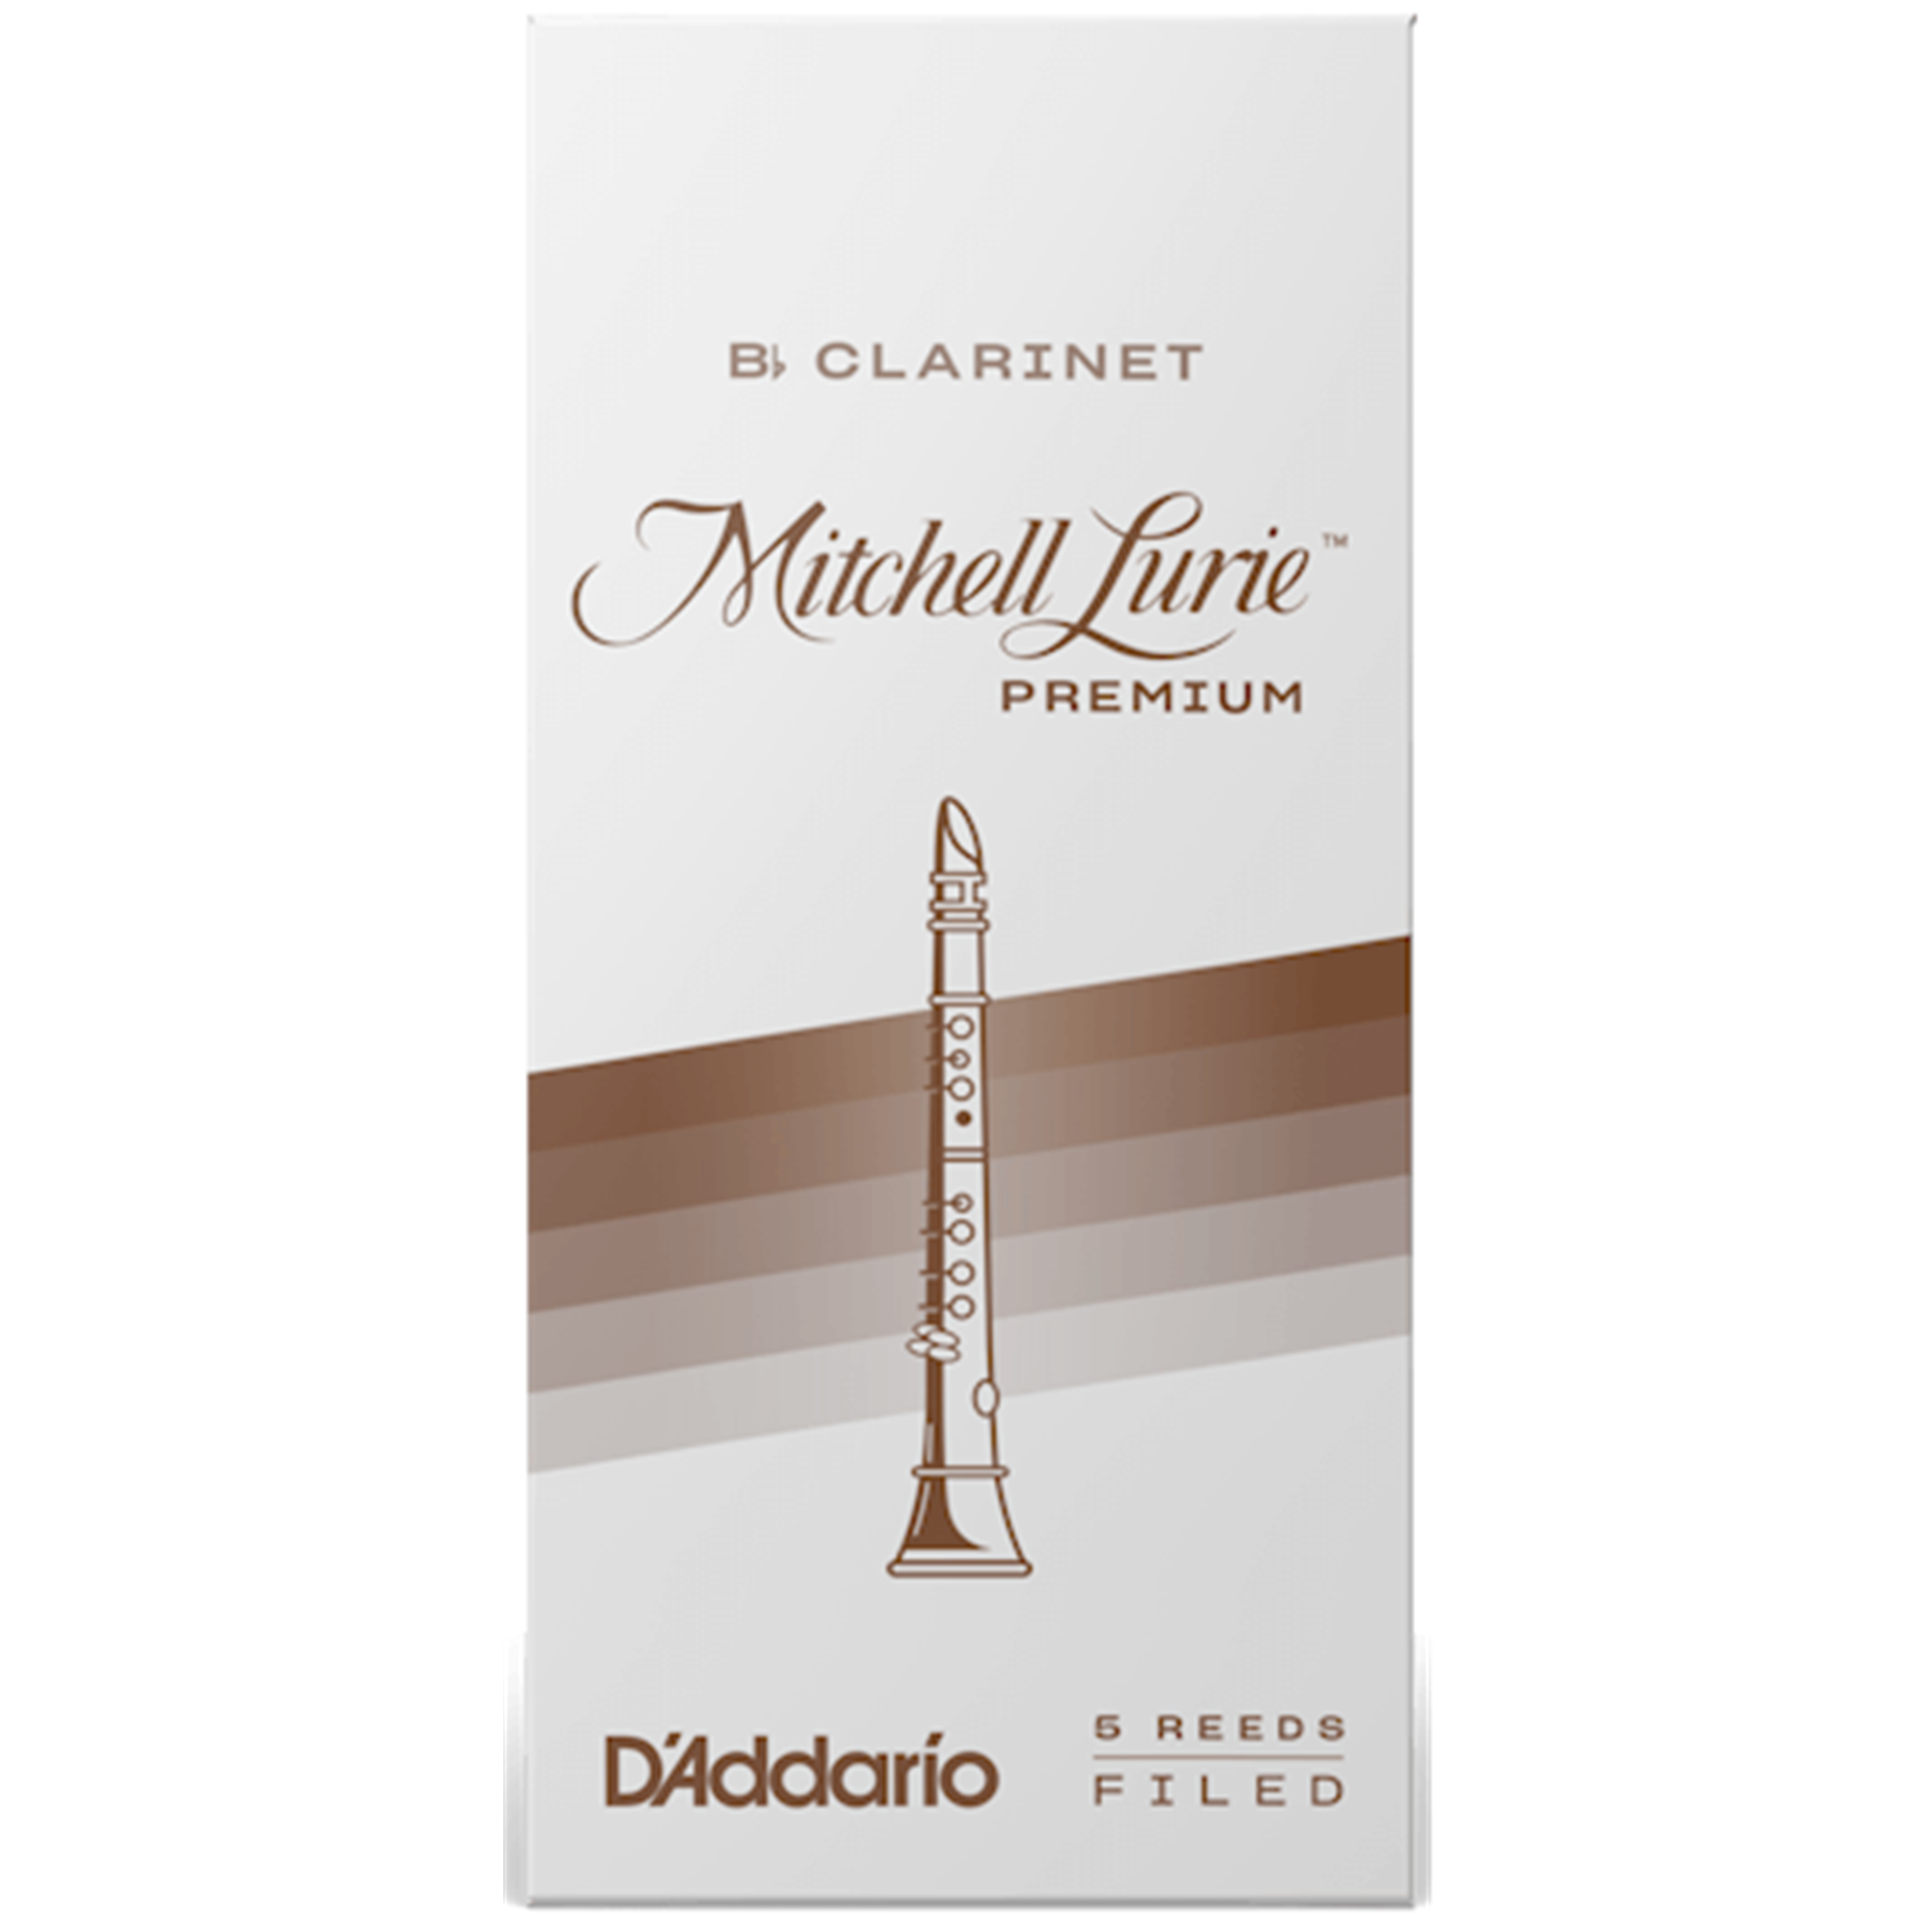 MITCHELL LURIE RMLP5BCL25 #2.5 Clarinet Premium Reeds, Box of 5